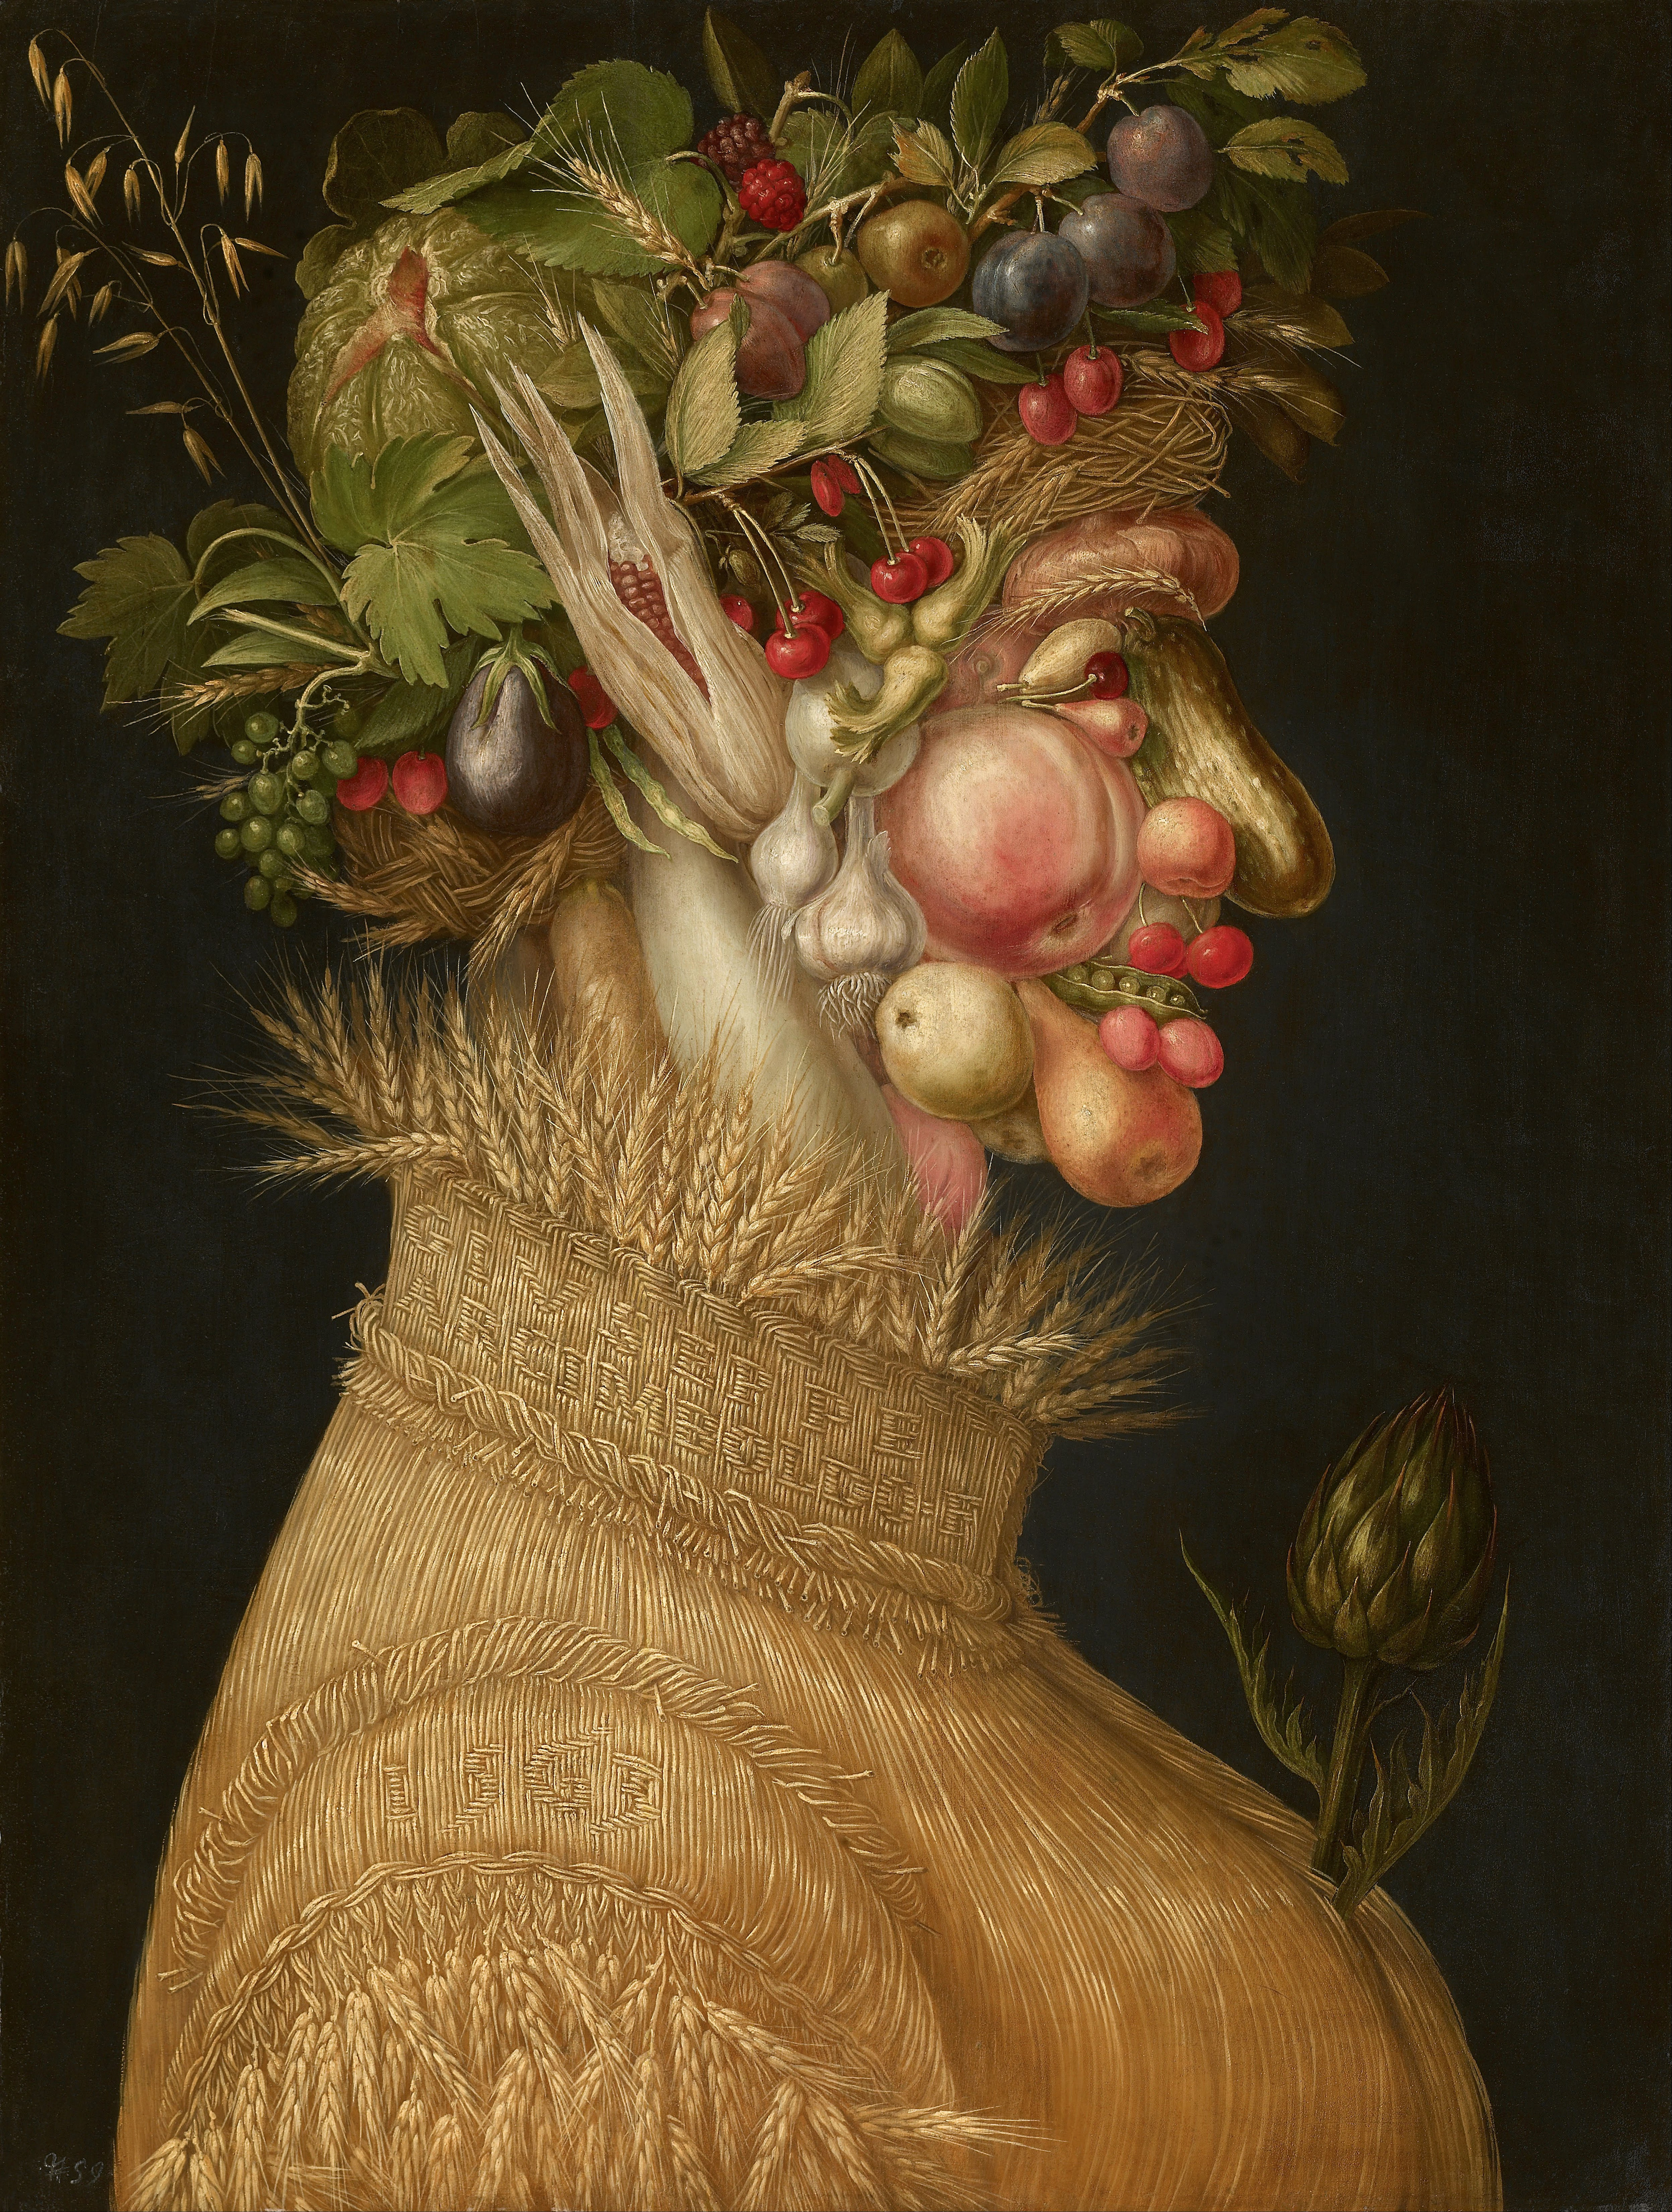 Zomer by Giuseppe Arcimboldo - 1573 - 76 x 64 cm 